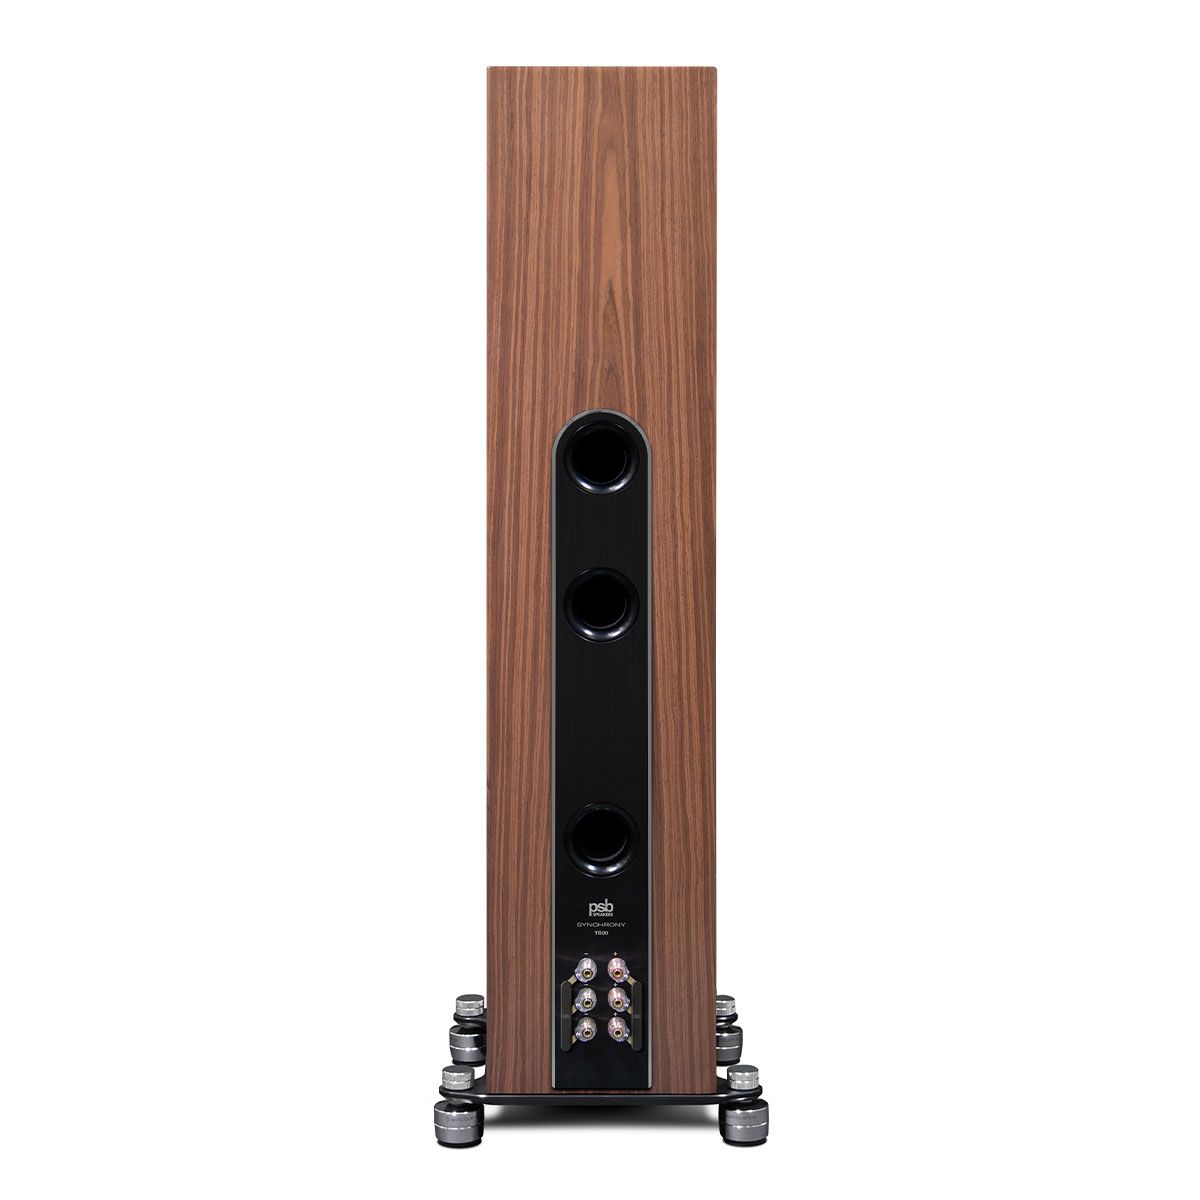 PSB Synchrony T600 Premium Tower Speaker - Walnut - single rear view